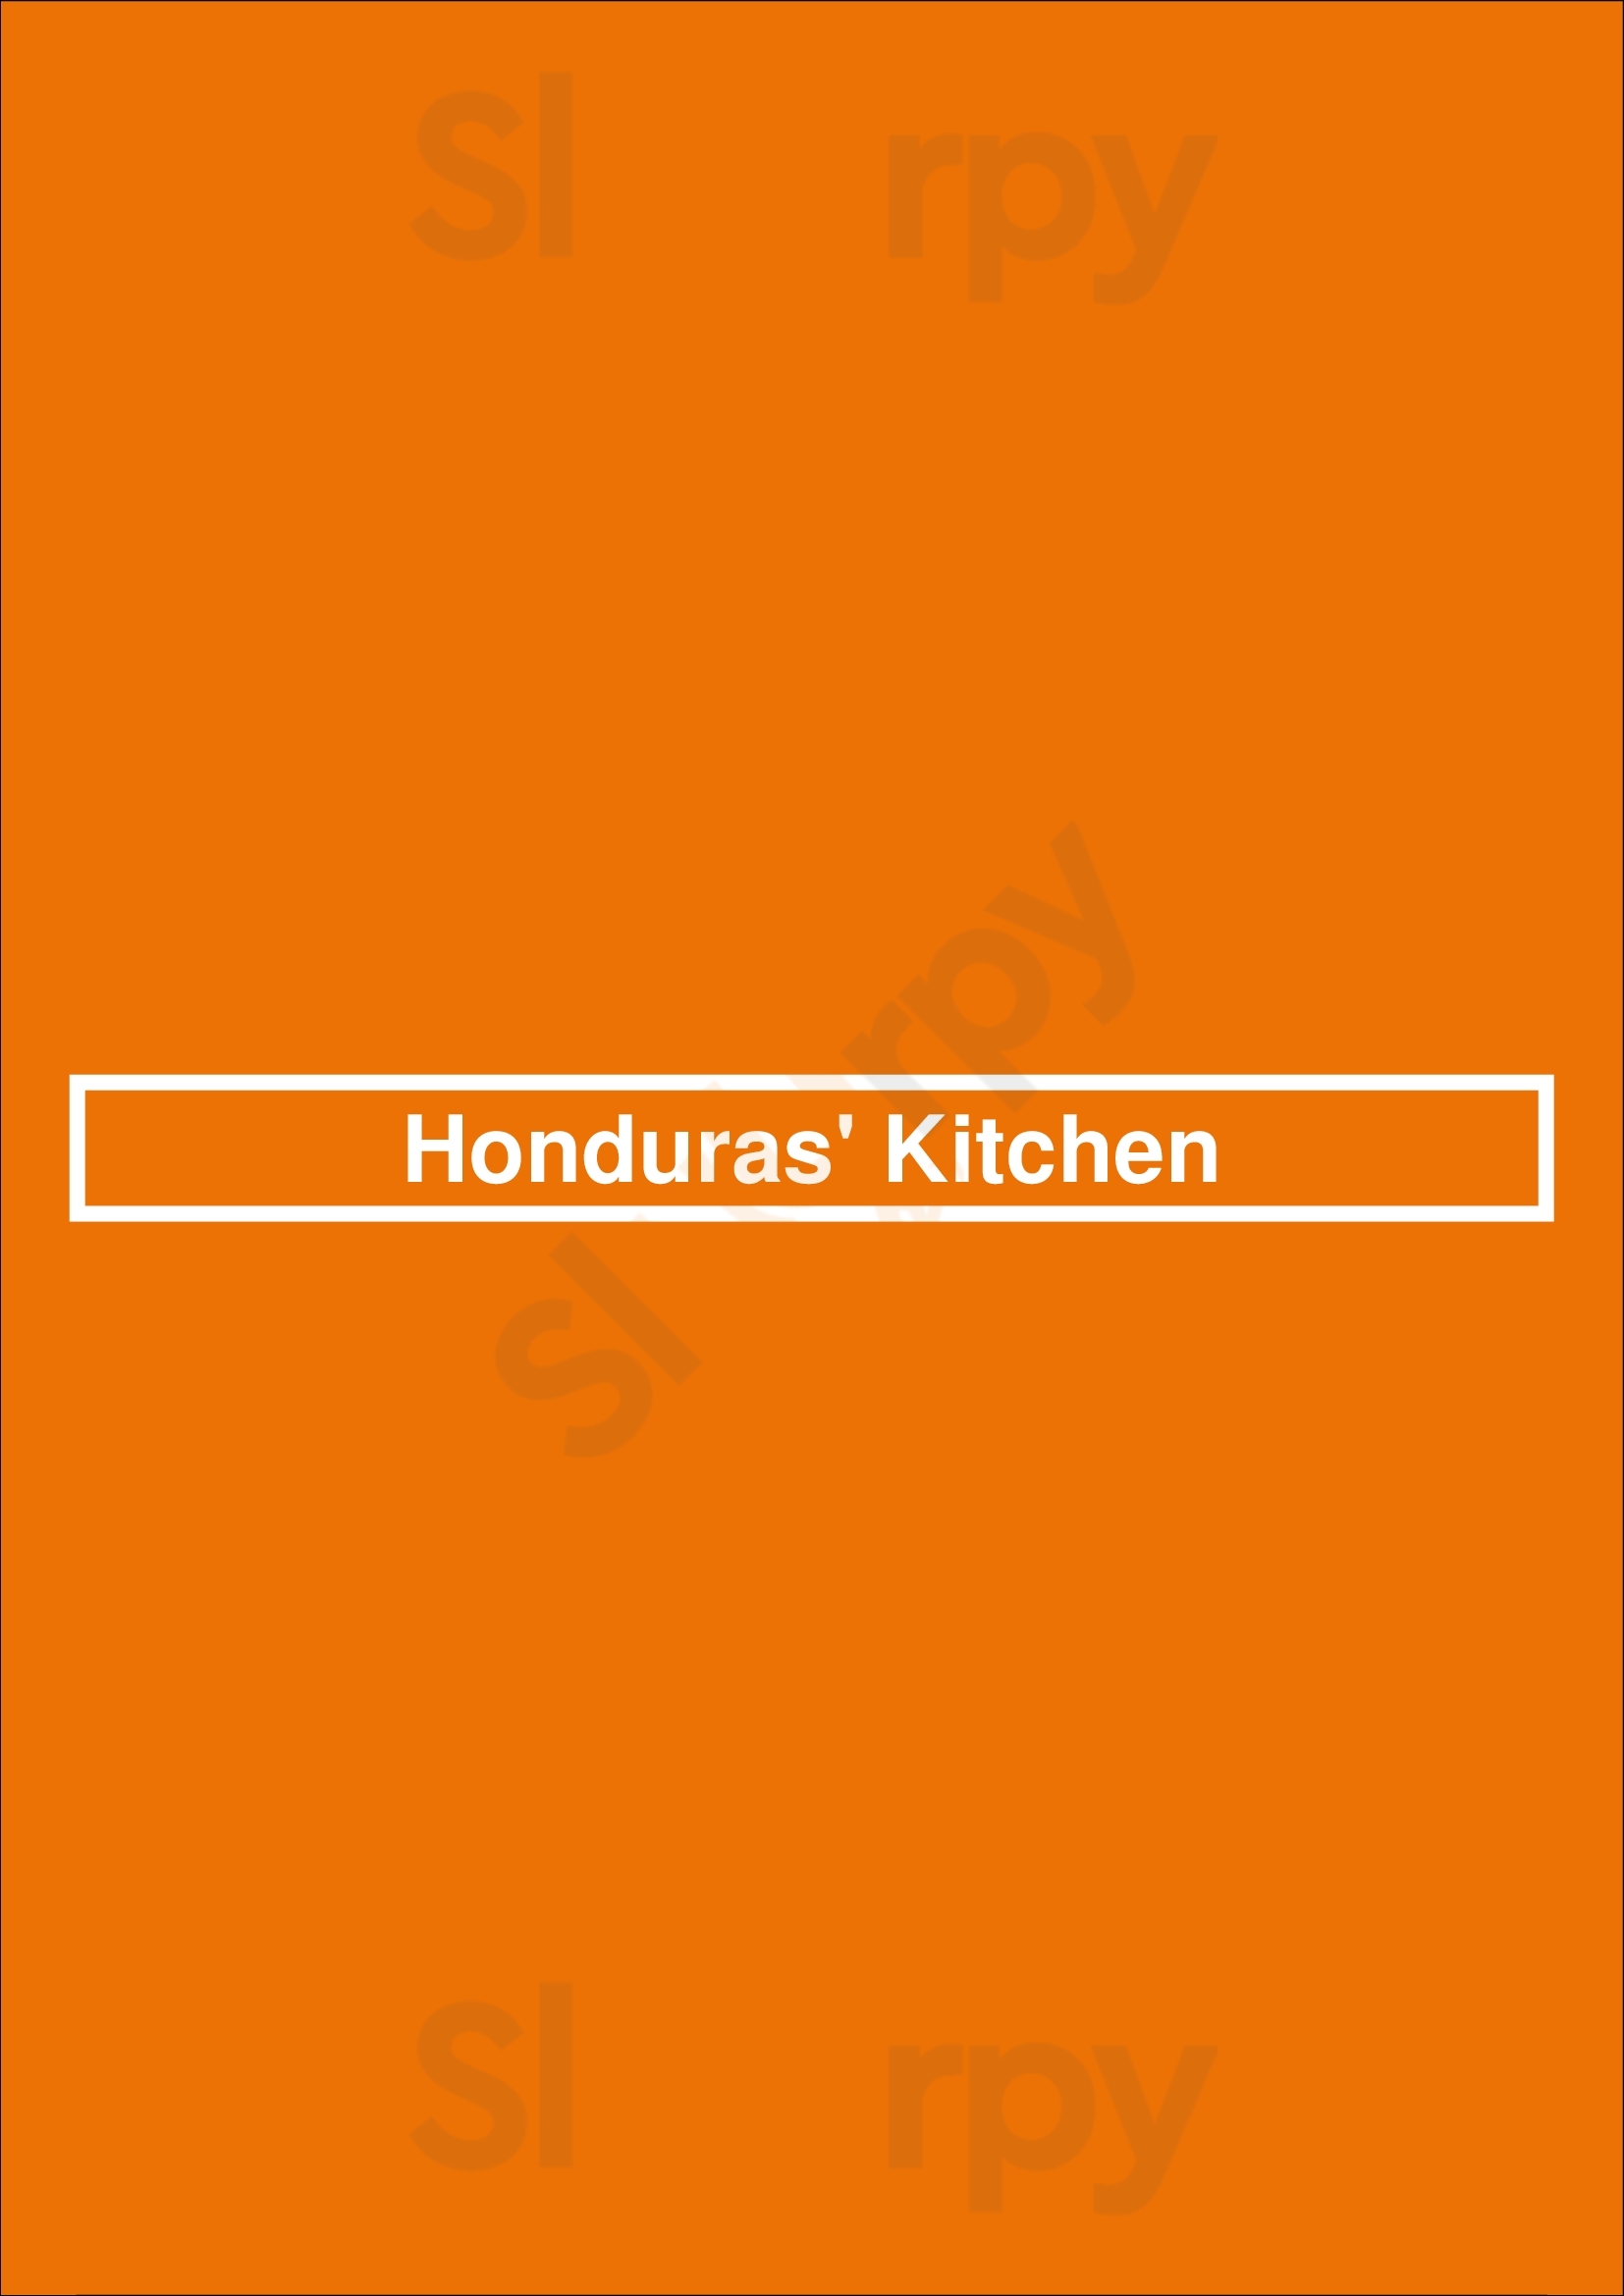 Honduras' Kitchen Long Beach Menu - 1